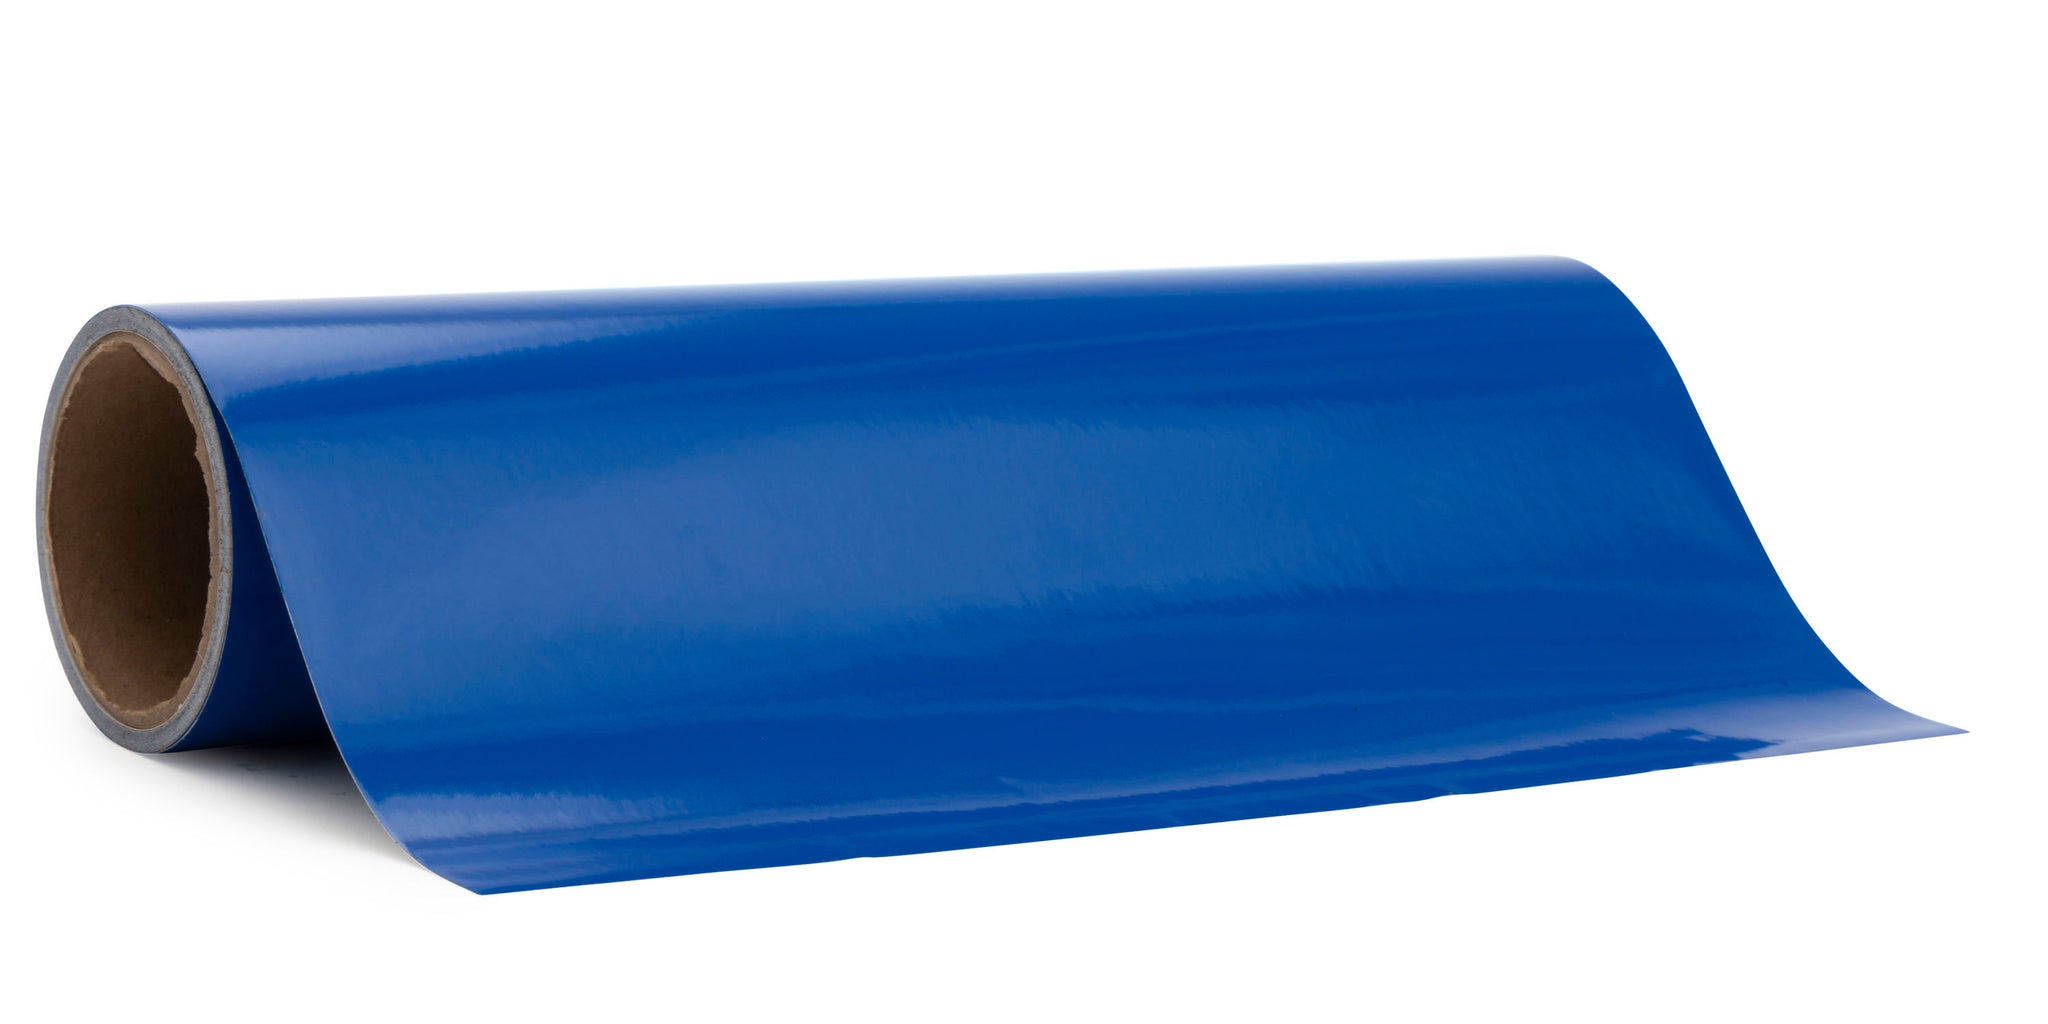 Easy Release Zip-Up Blue Masking Tape, 2x60 Yds, 180' Roll, 5 Rolls